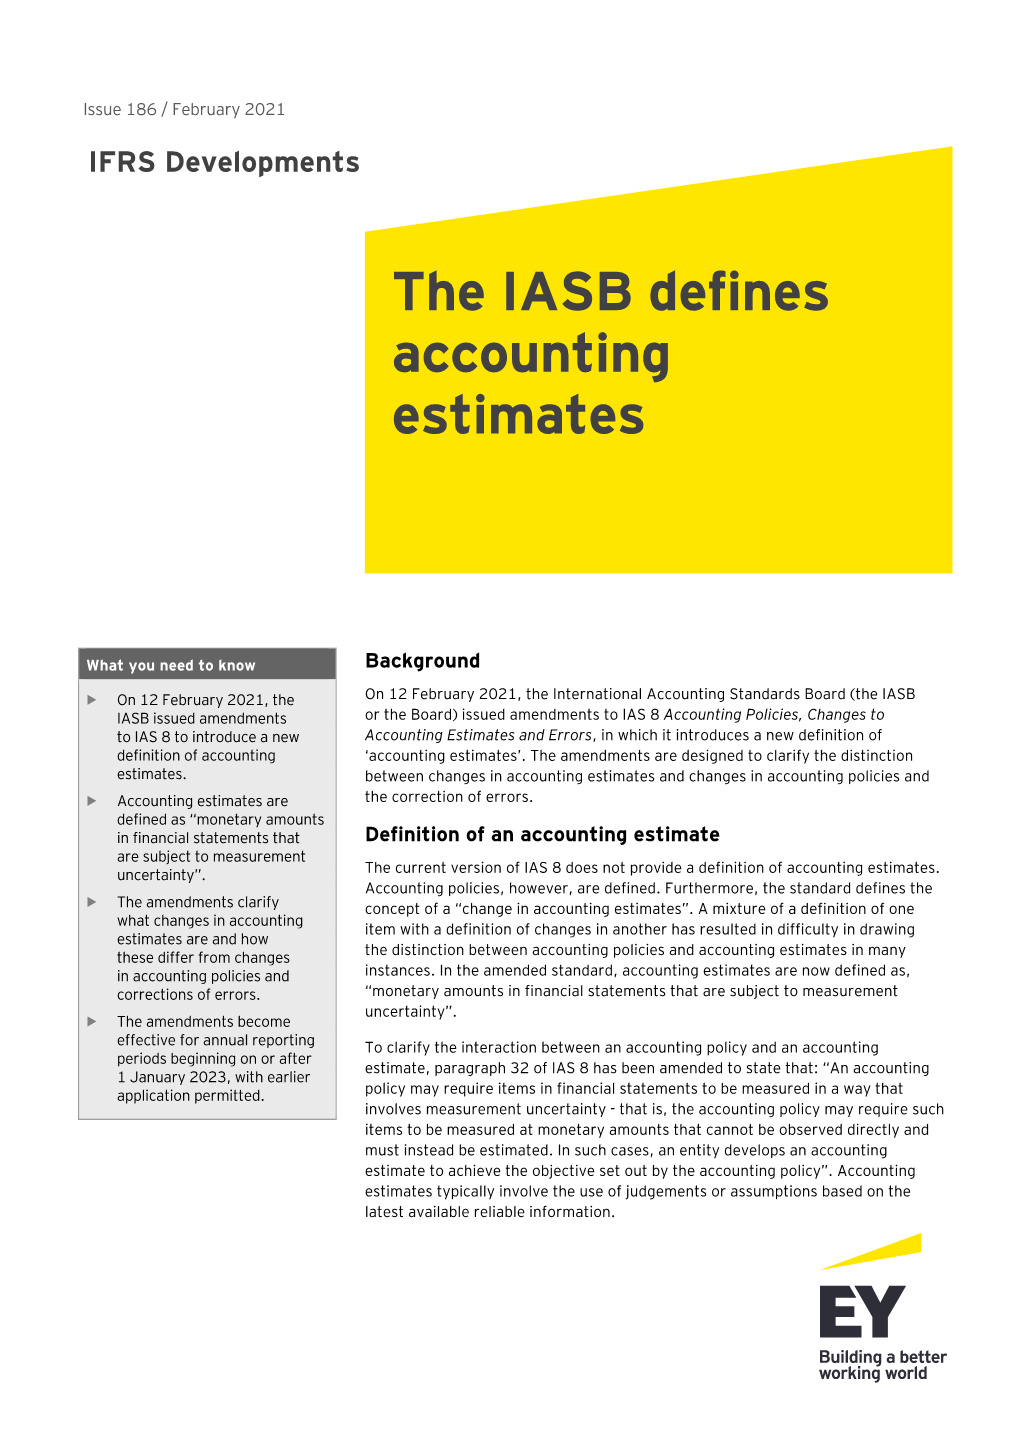 The IASB Defines Accounting Estimates